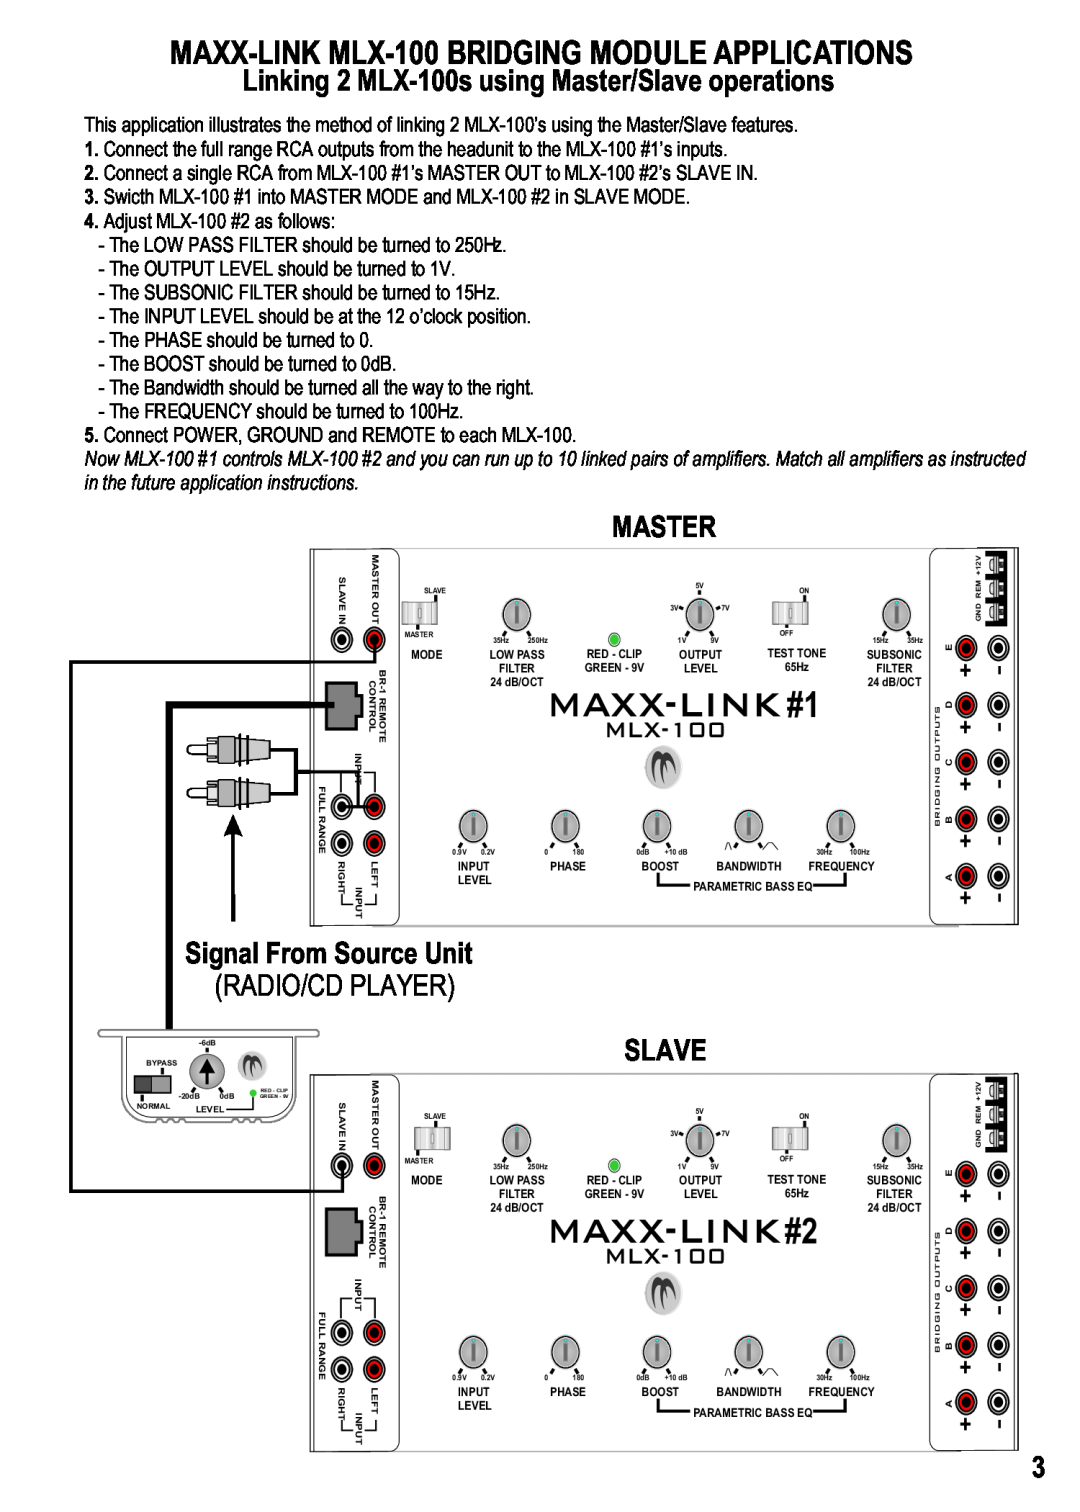 Maxxsonics manual MAXX-LINK MLX-100BRIDGING MODULE APPLICATIONS, MAXX-LINK#1, MAXX-LINK#2, ++ + + 